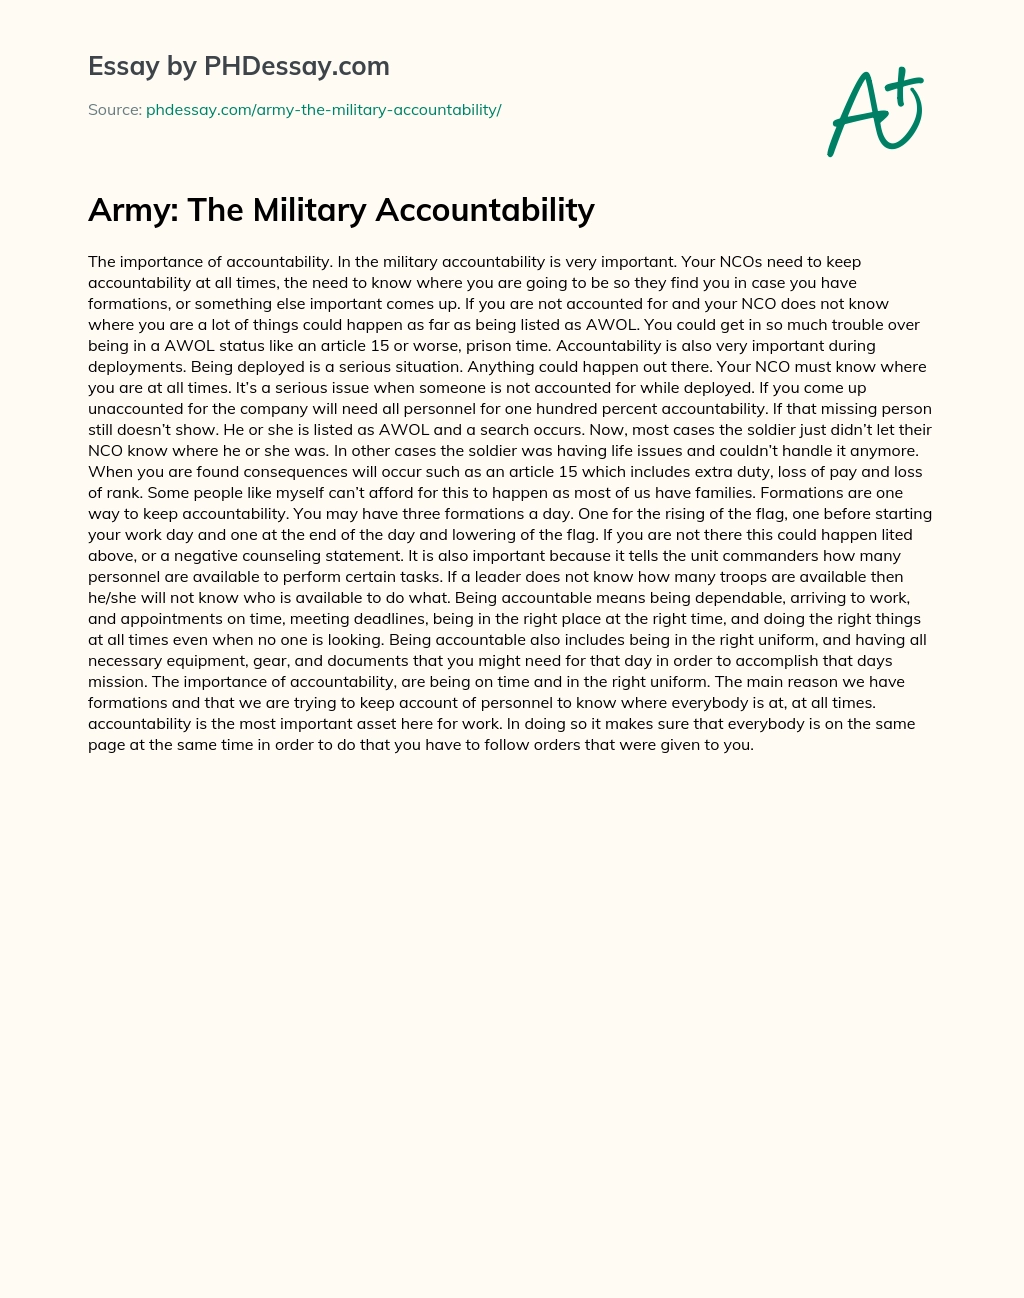 Army: The Military Accountability essay